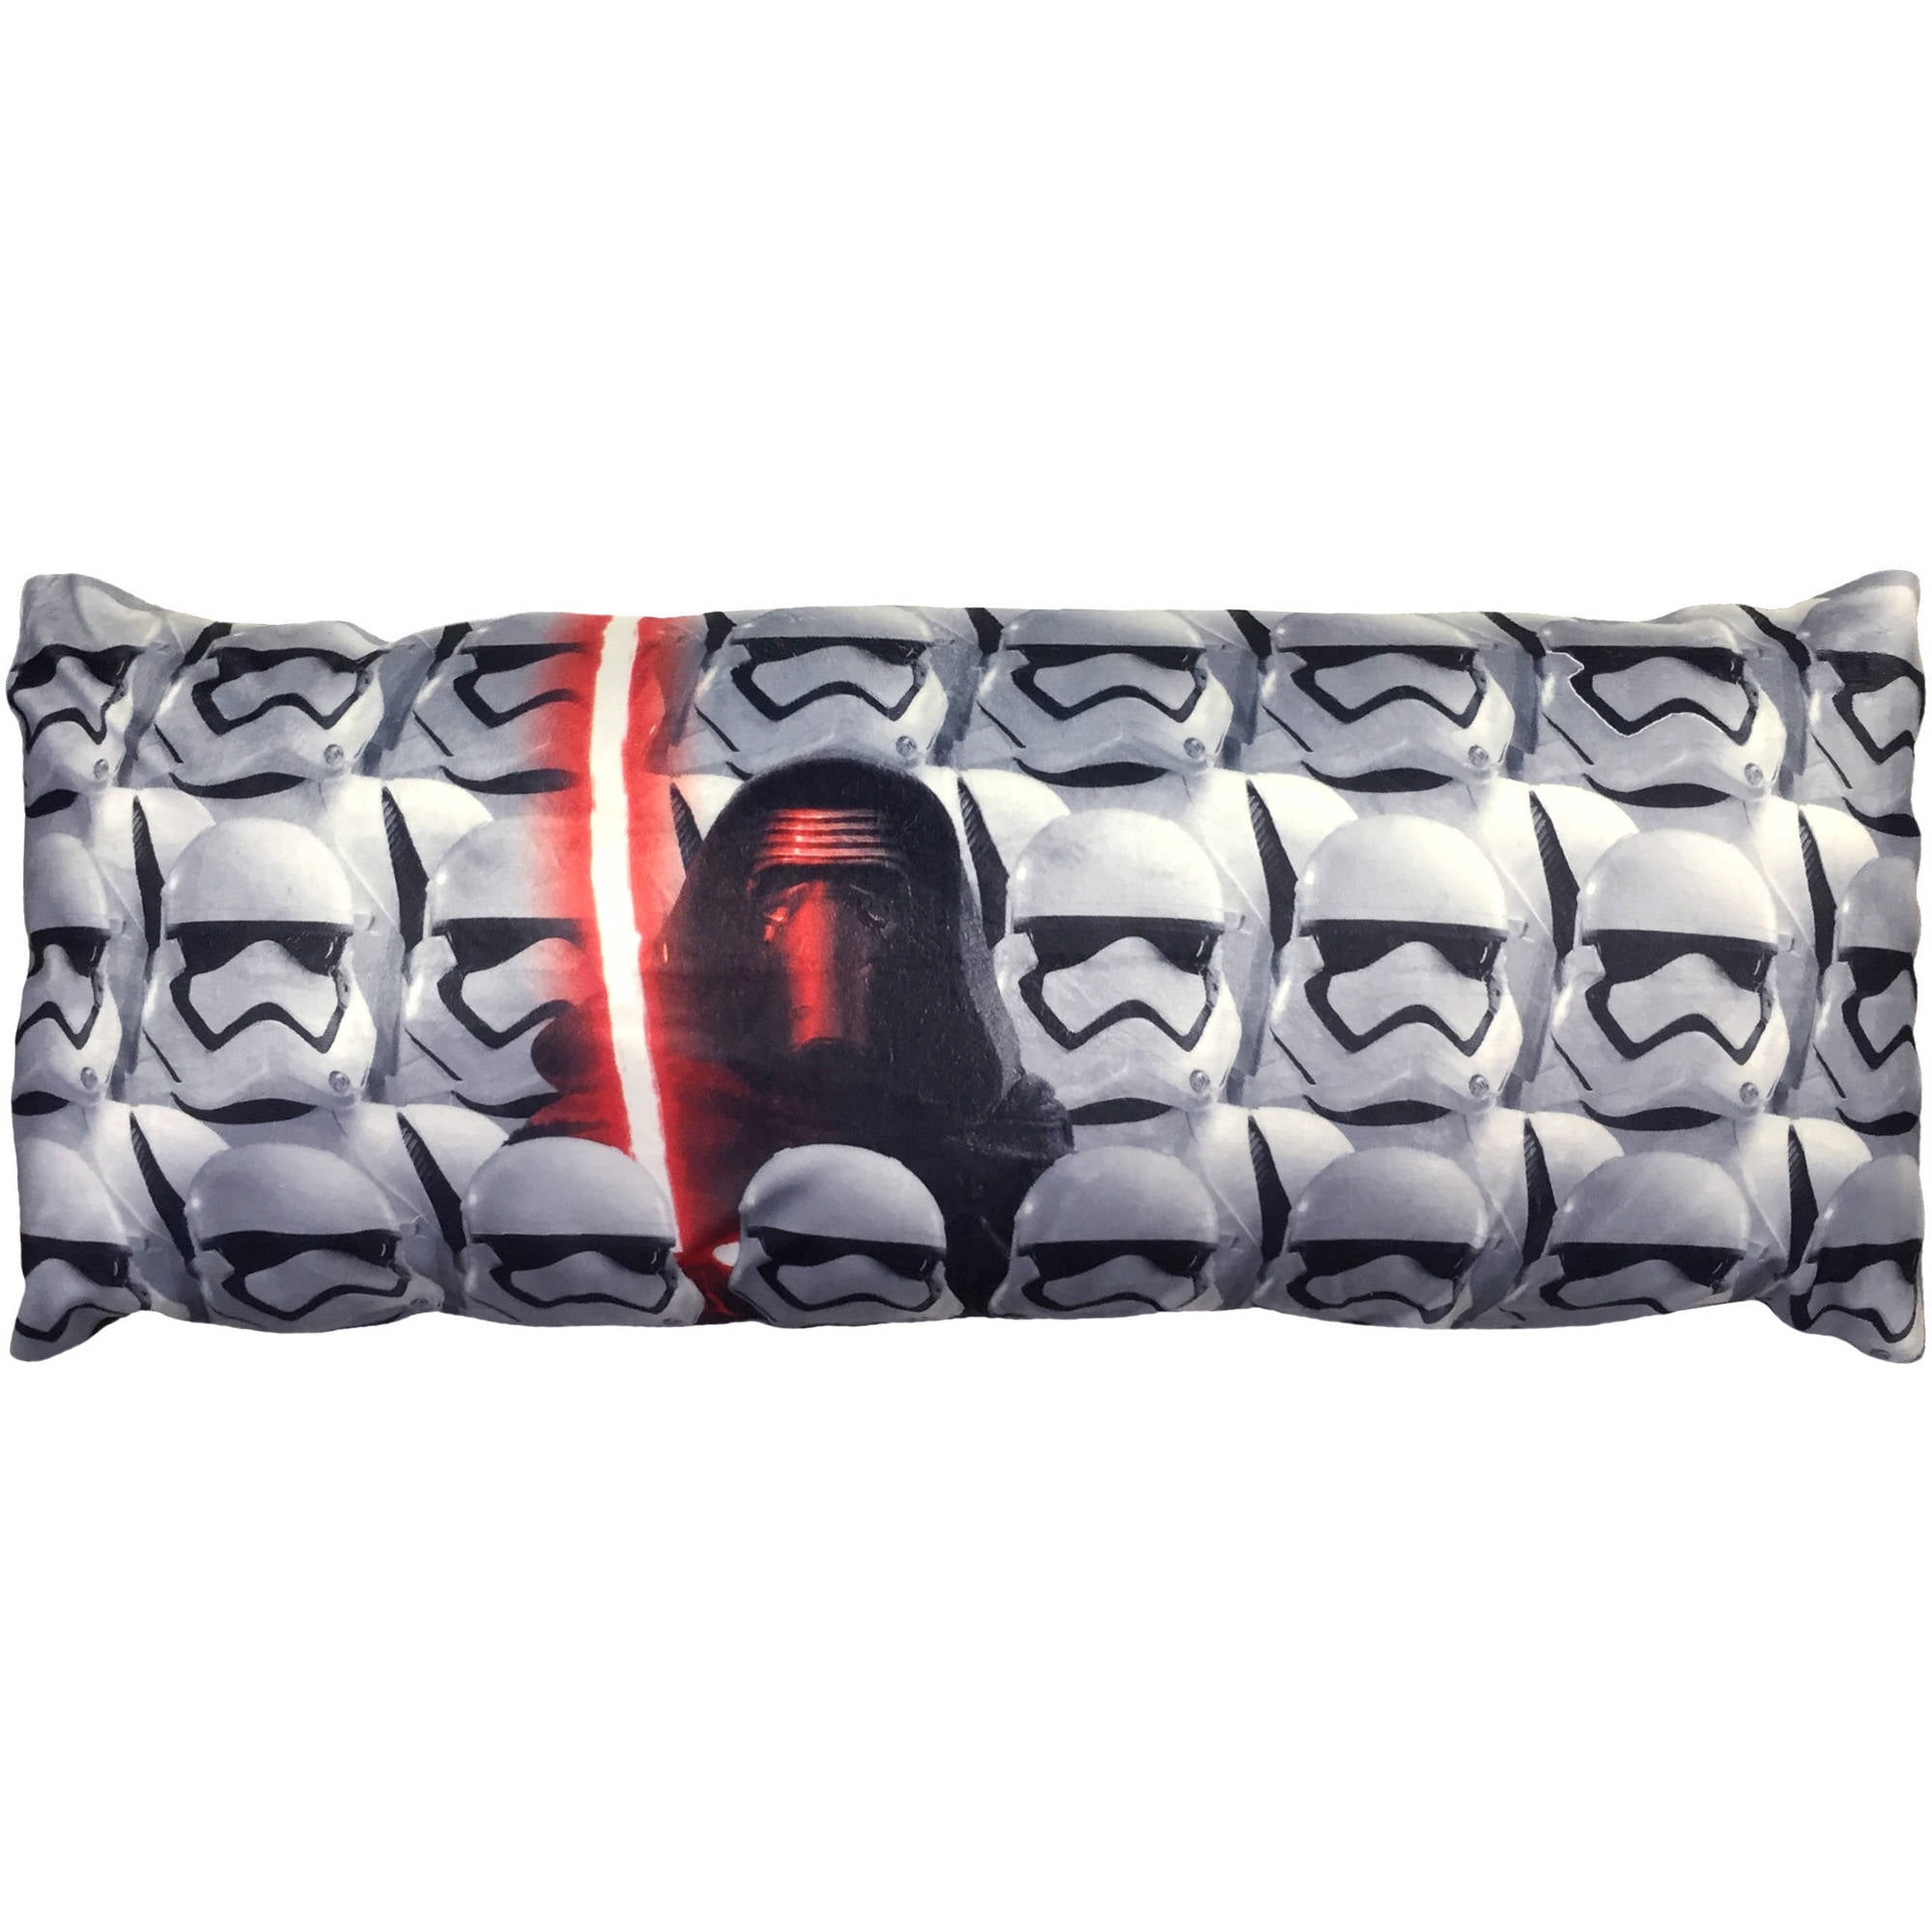 Star Wars Oversized Body Pillow, 1 Each 